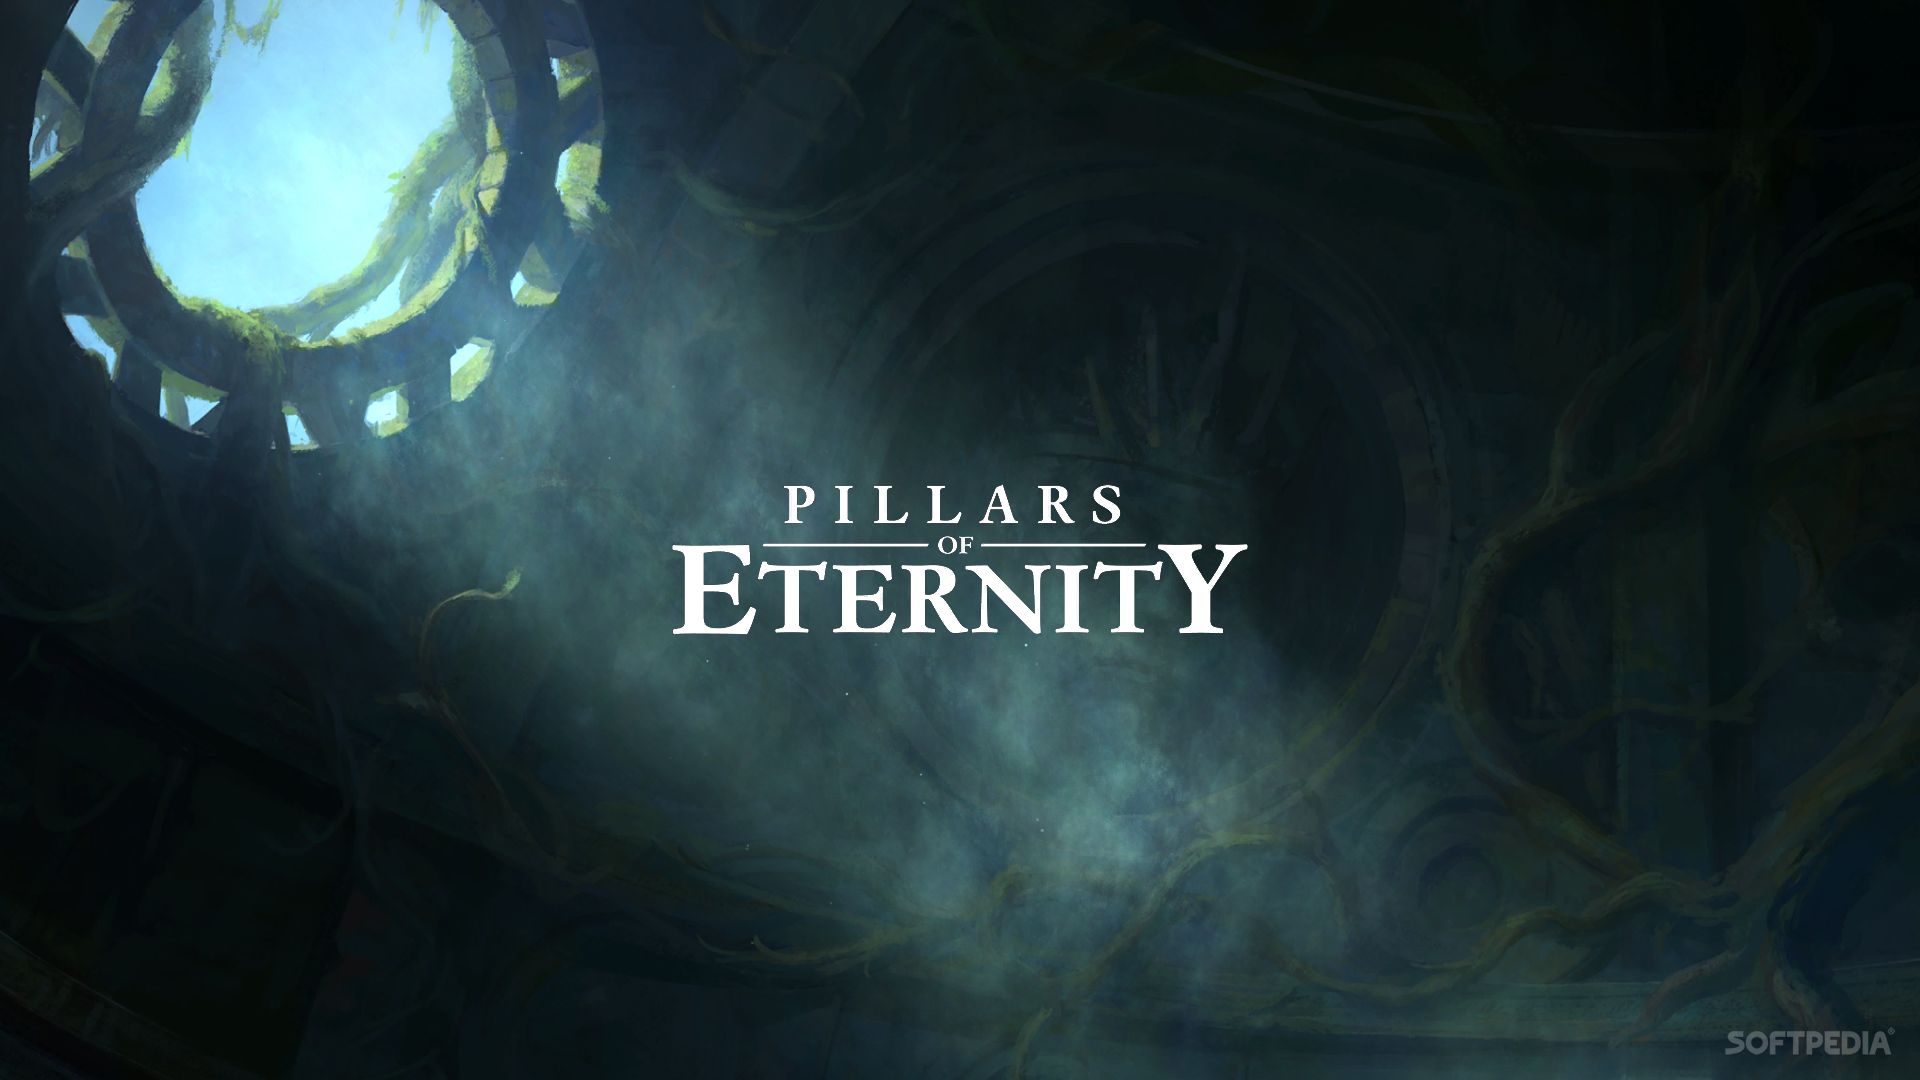 Pillars-of-Eternity-Review-PC-477364-3.jpg